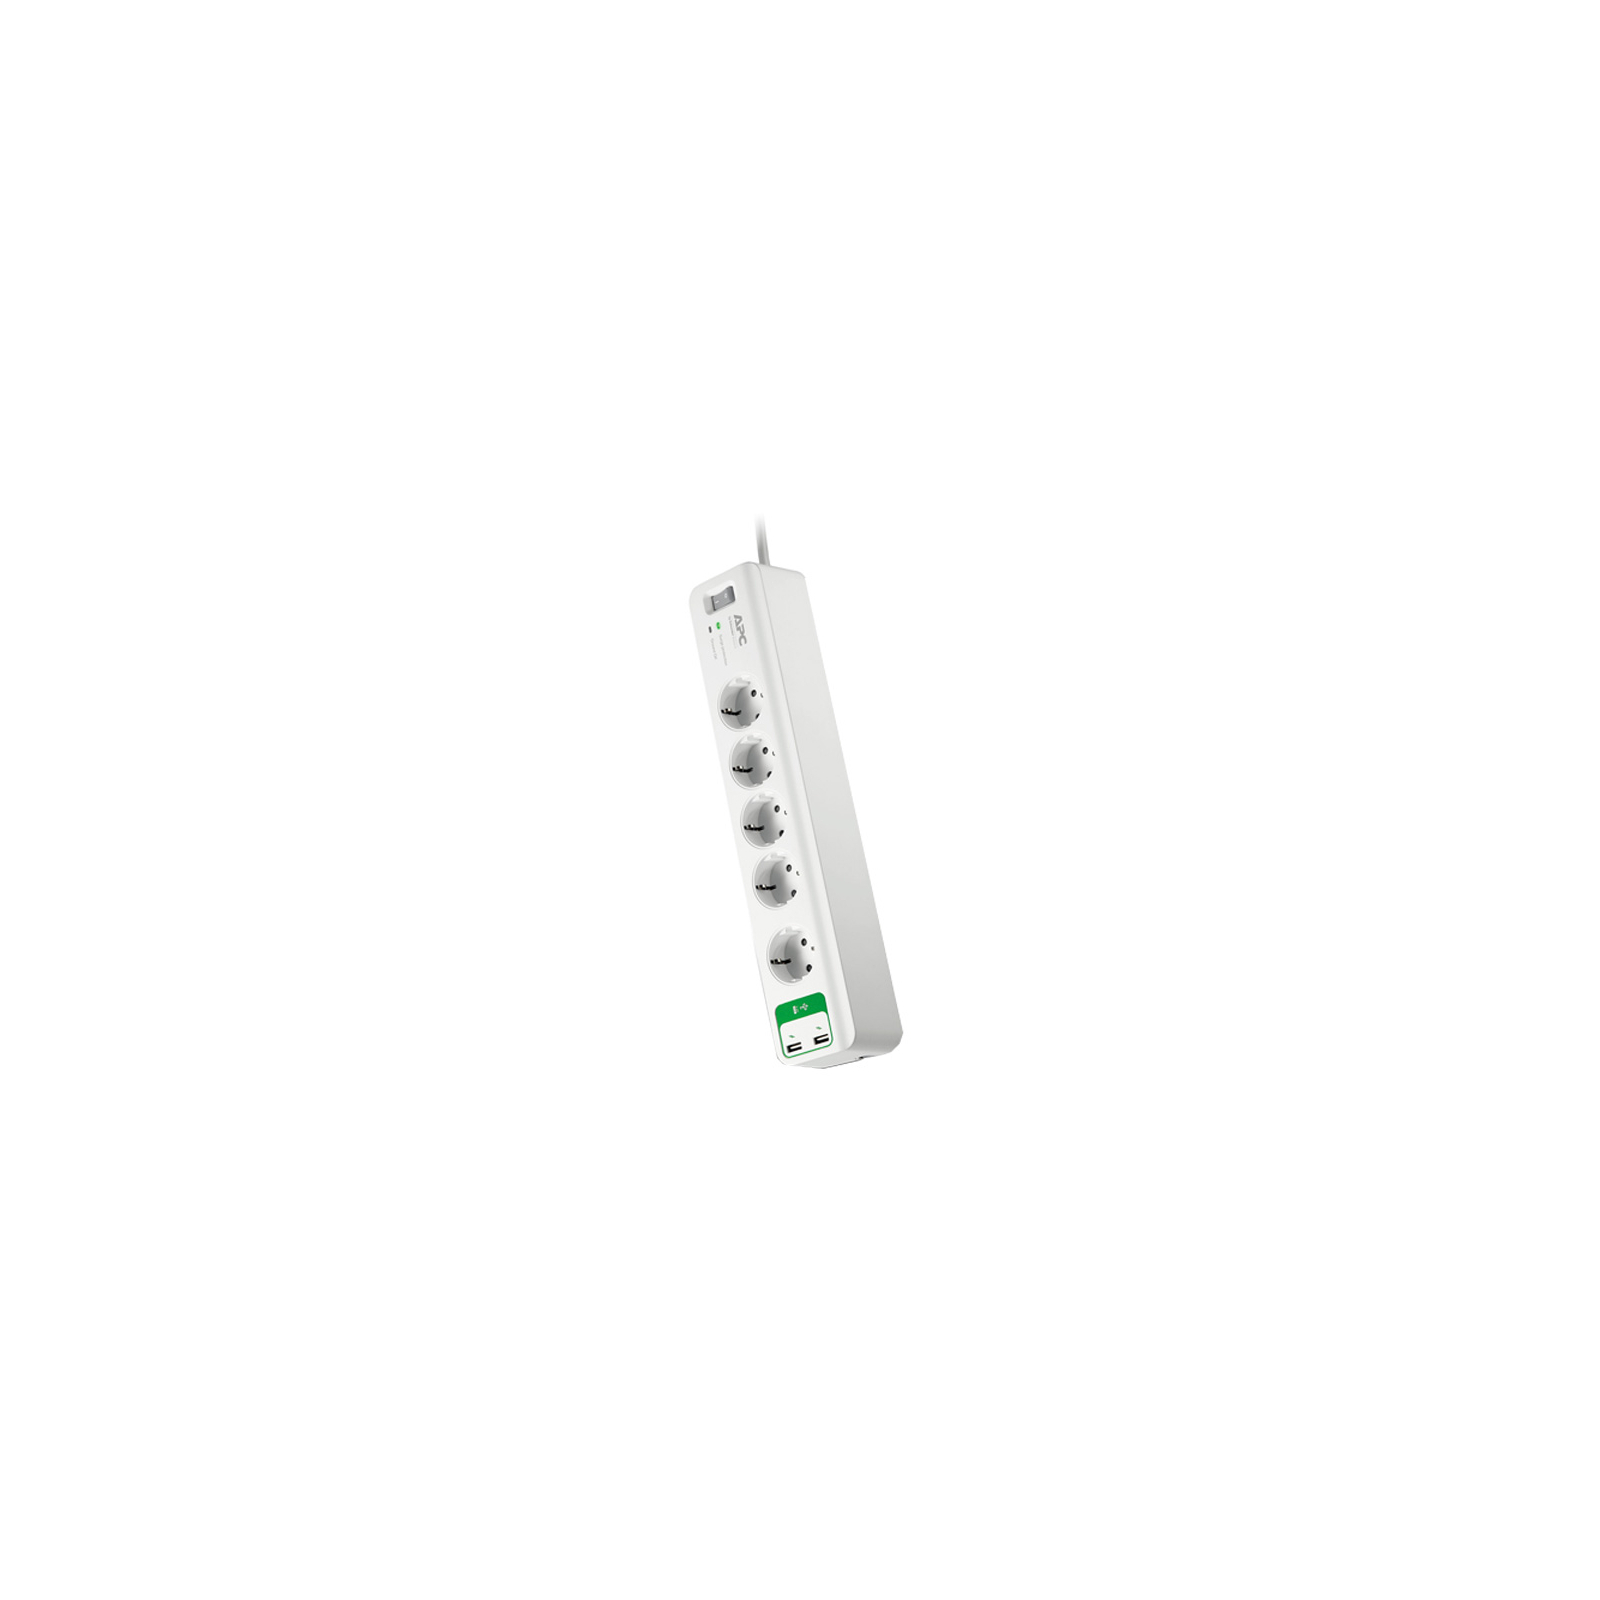 Сетевой фильтр питания APC Essential SurgeArrest 5 outlets ++ 2 USB (5V, 2.4A) (PM5U-RS) изображение 3